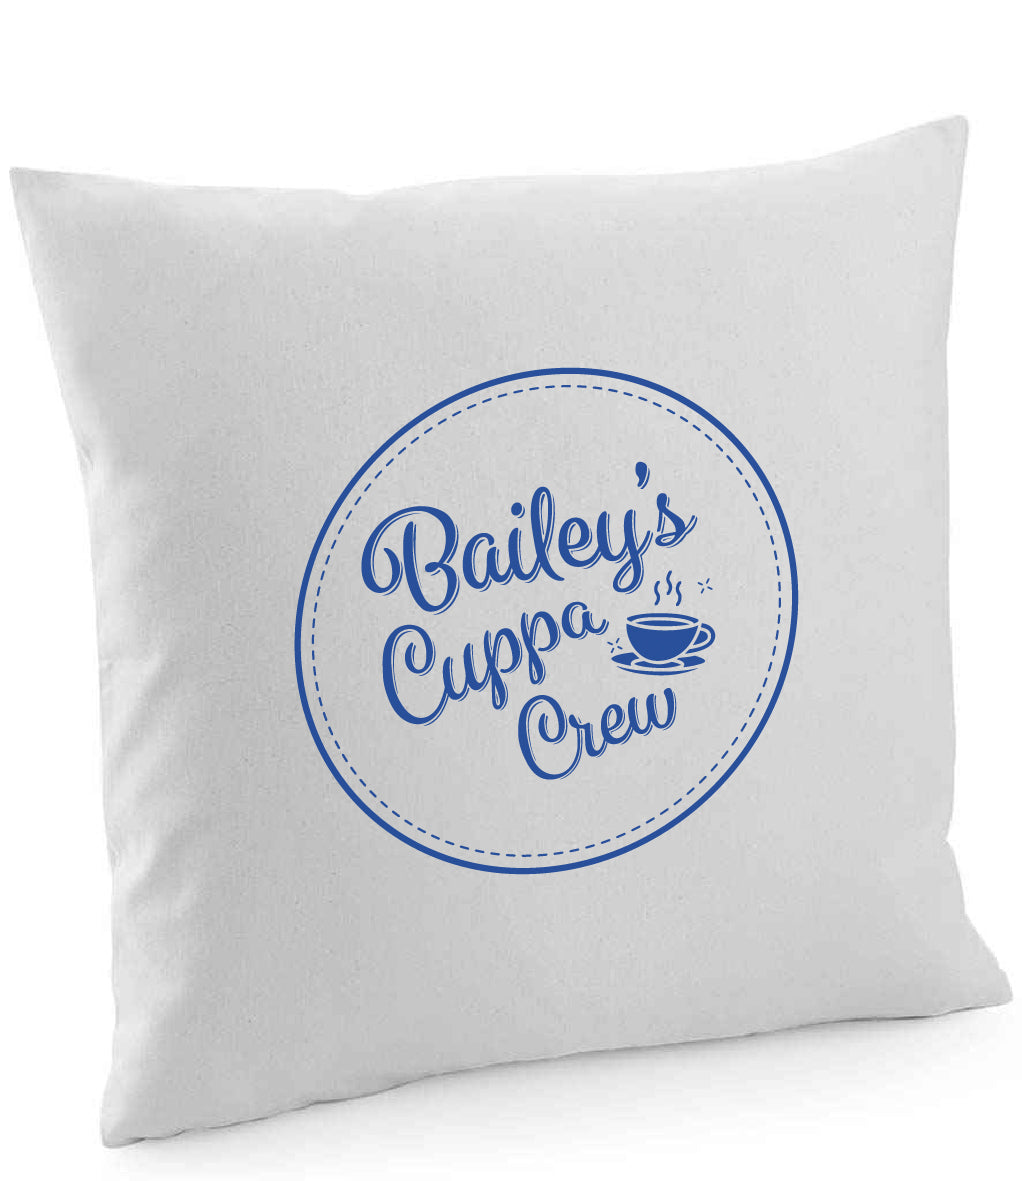 Bailey's Cuppa Crew Cushion Cover